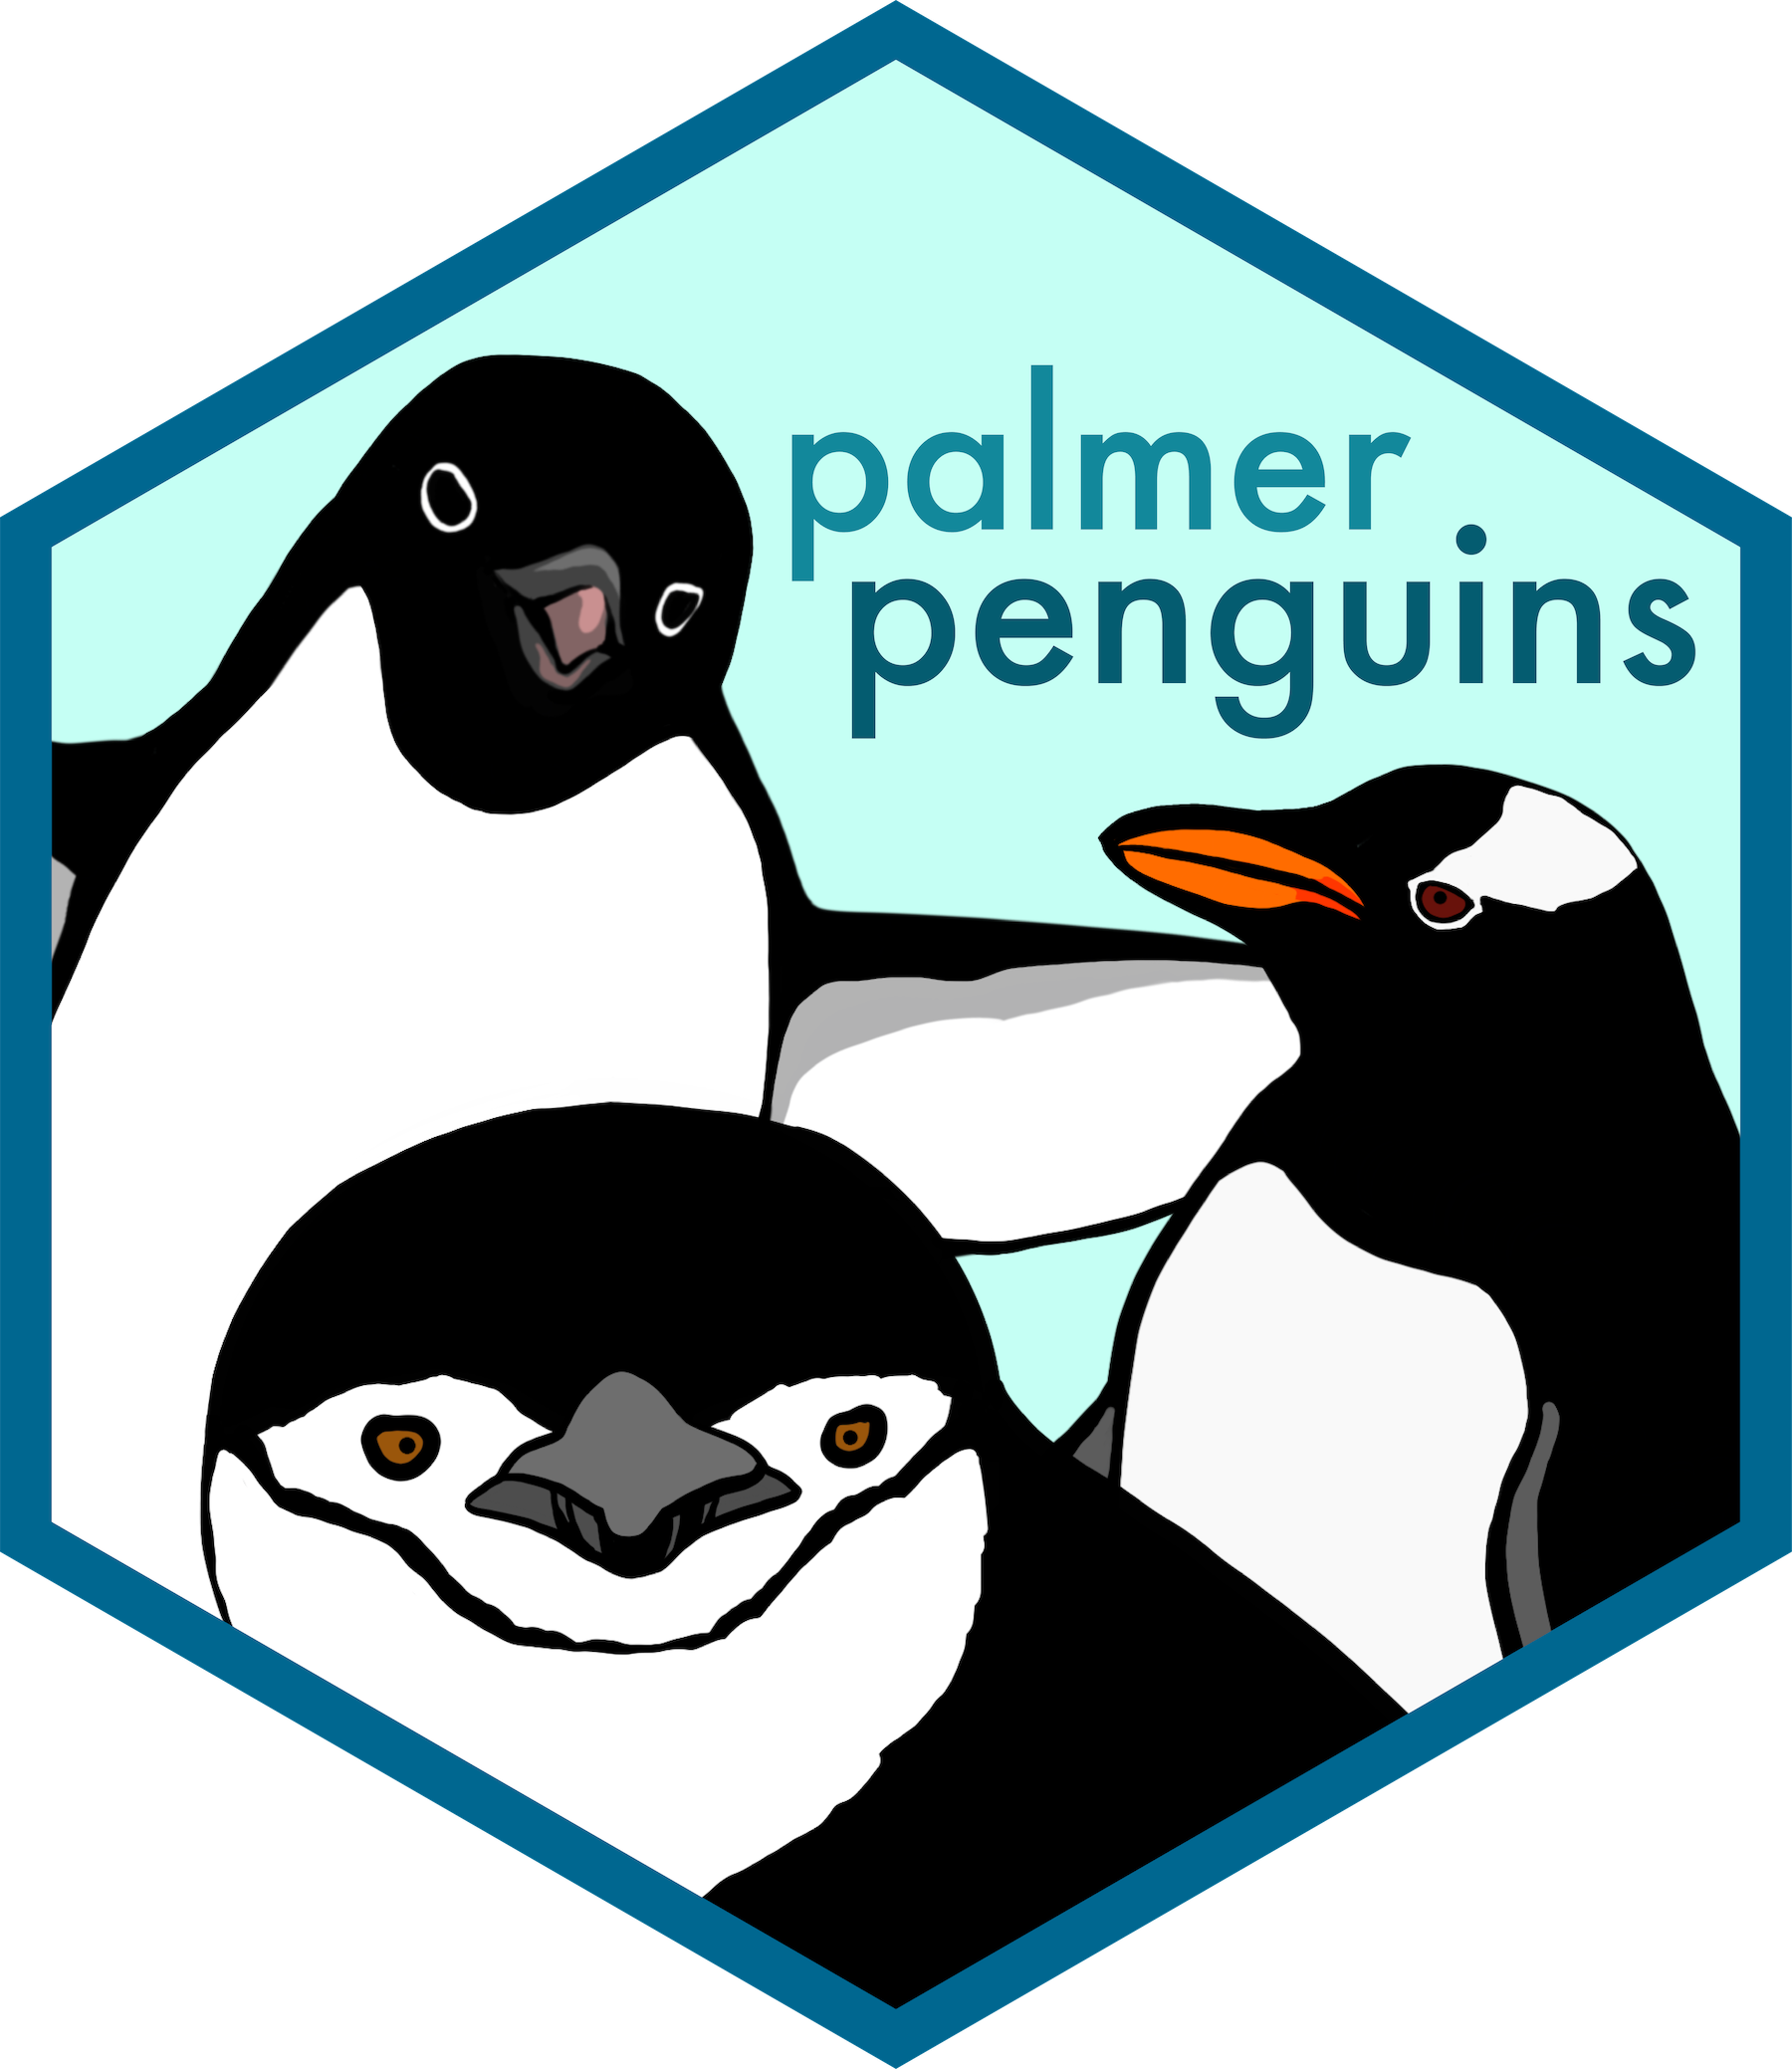 Palmer Penguins HEX sticker